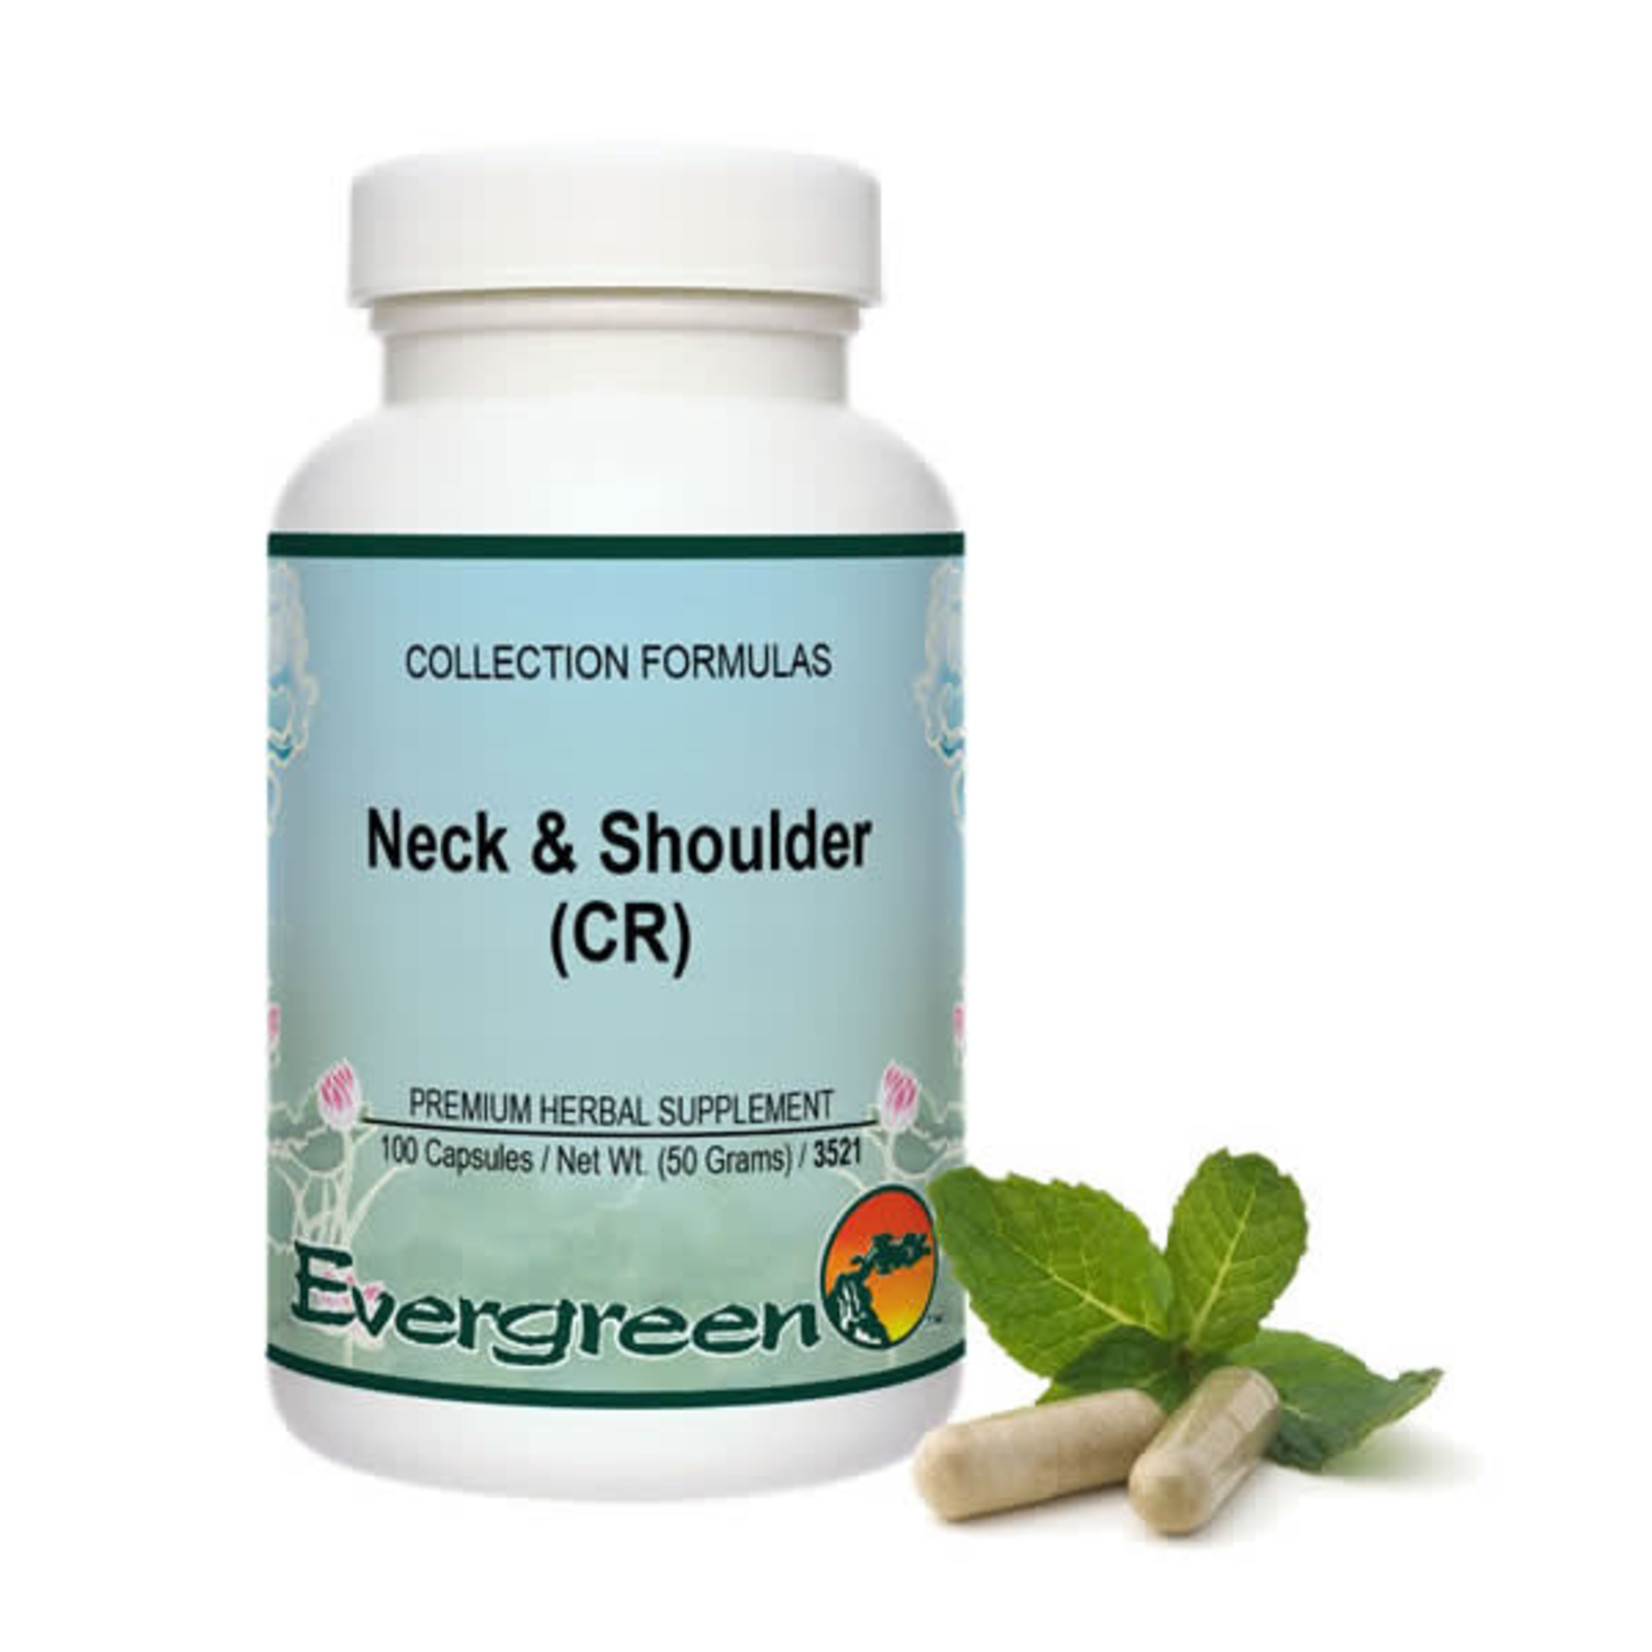 Neck & Shoulder (CR) (Evergreen Herbs)